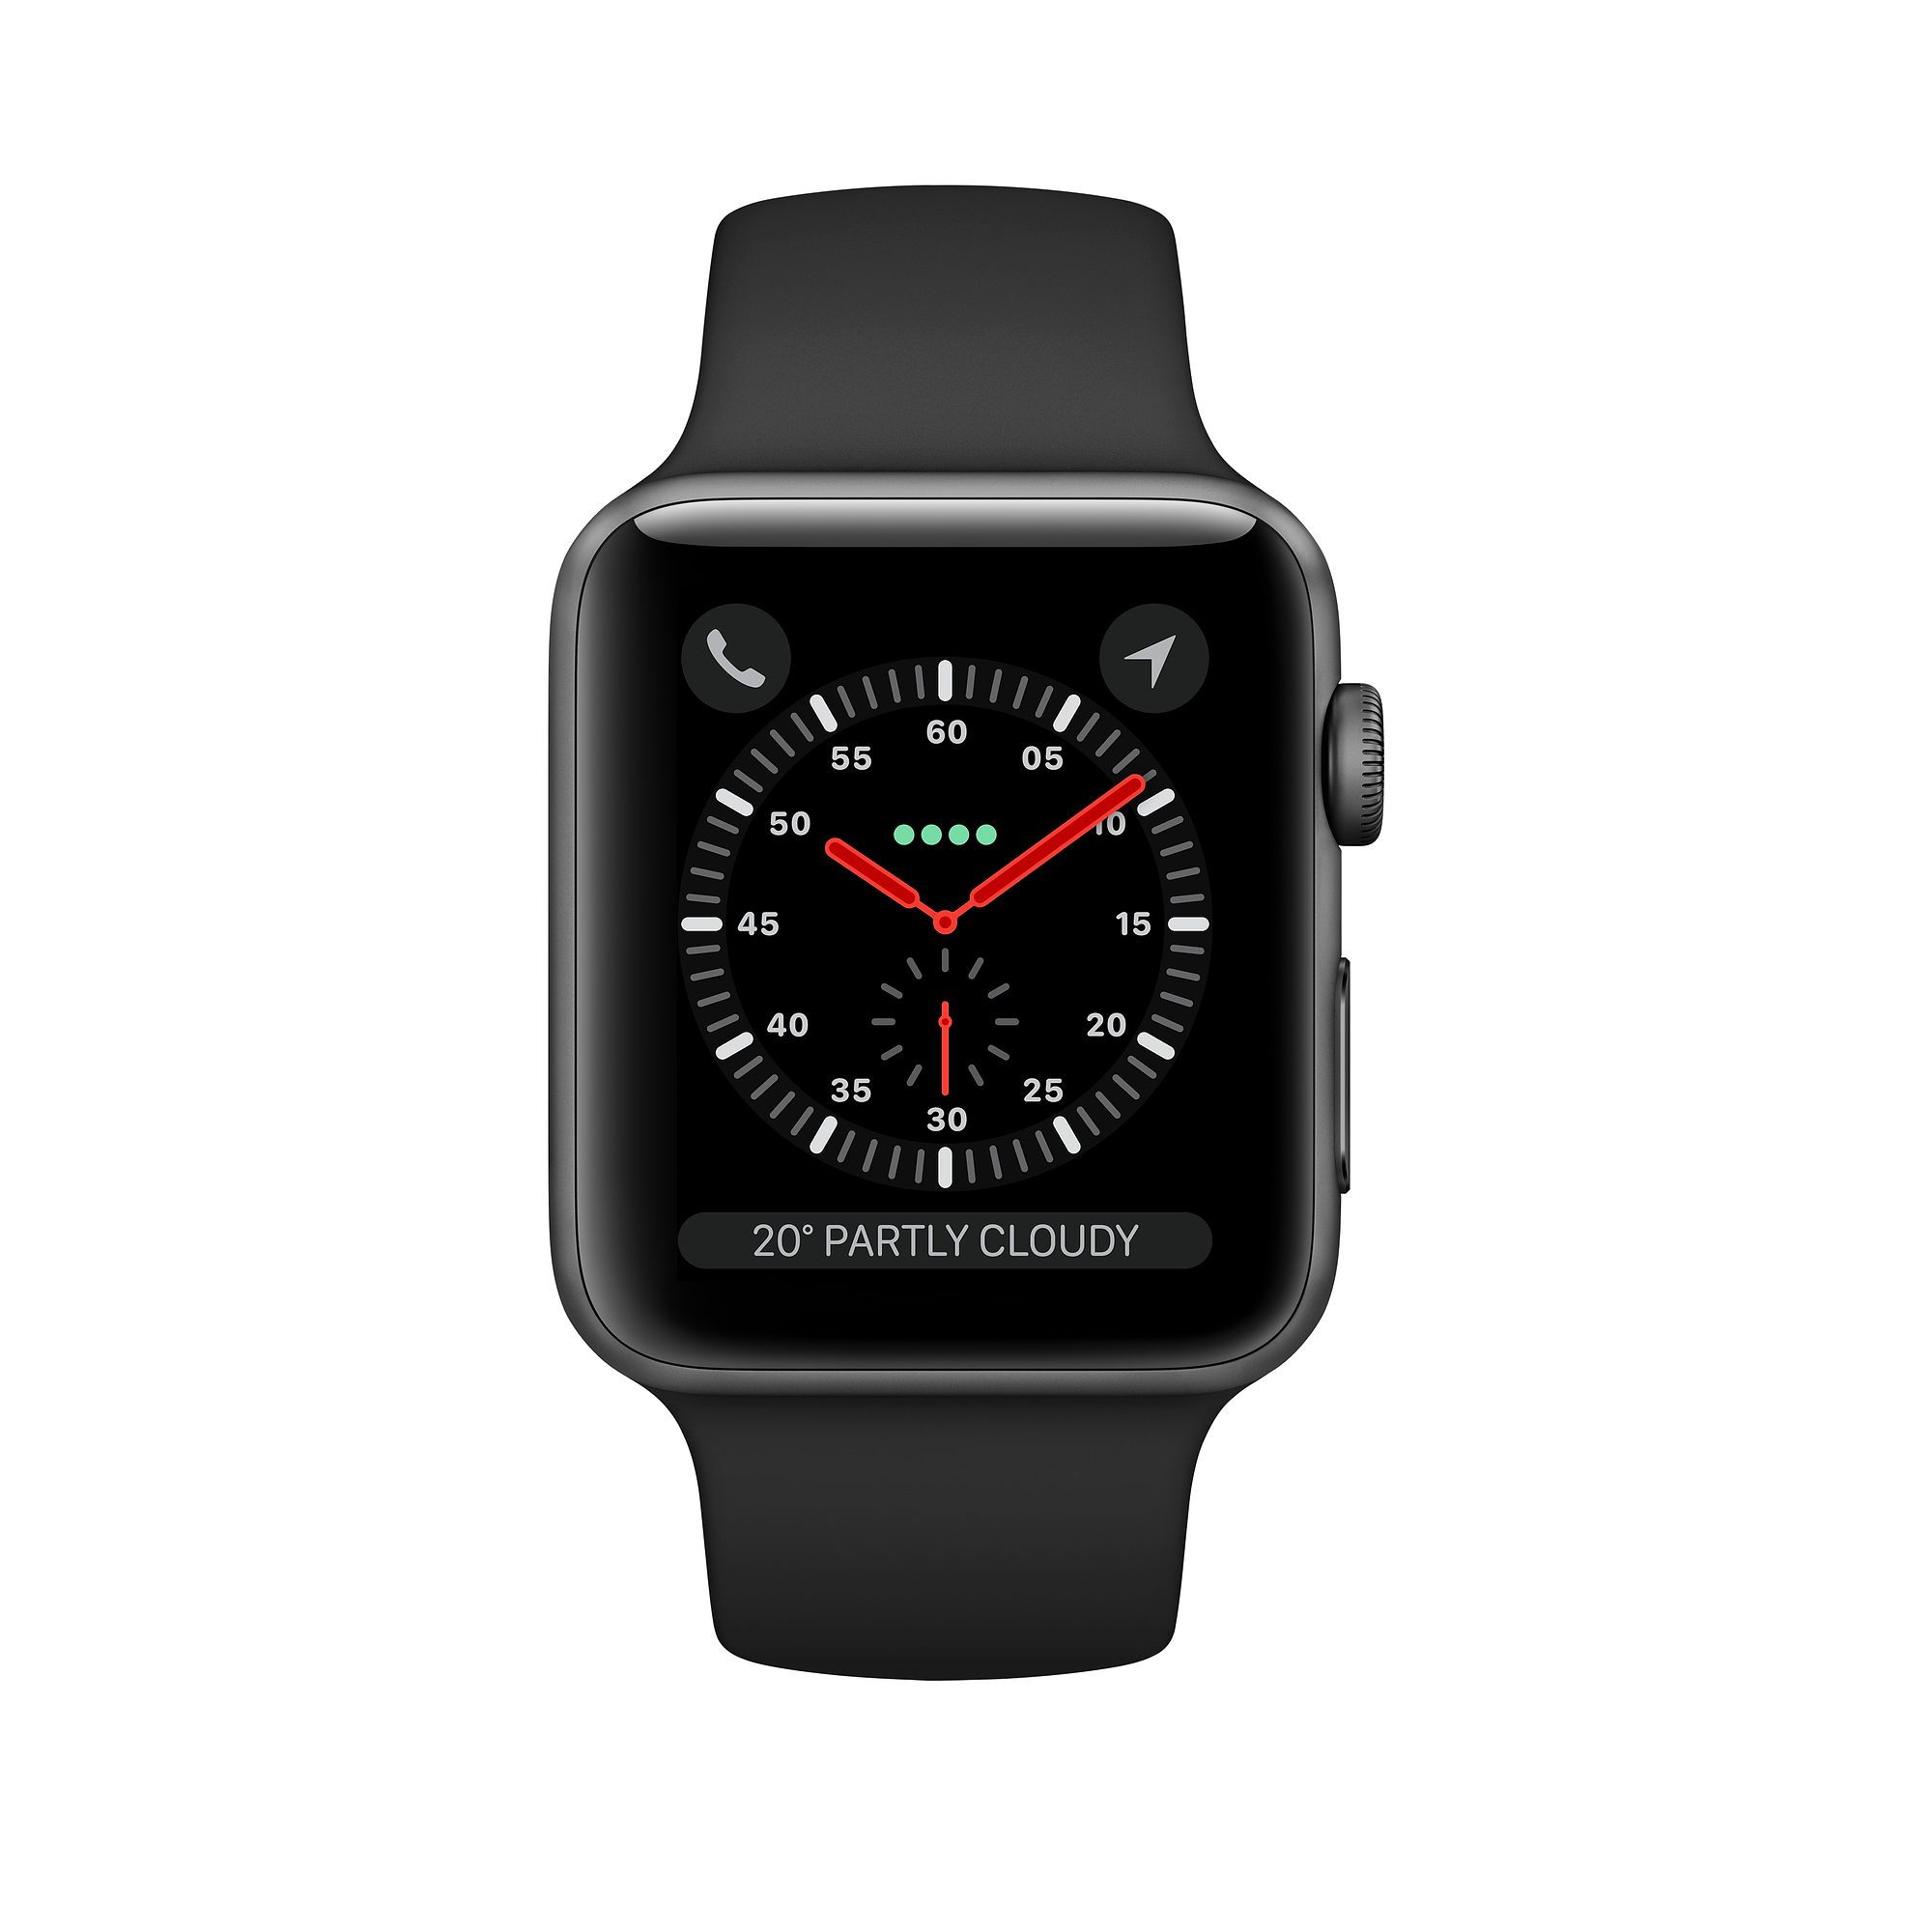 Watch часы 3 42mm. Apple watch 3. Эппл вотч 3 42. Смарт-часы Apple watch Series 3 42mm. Часы Apple IWATCH 3 42mm.